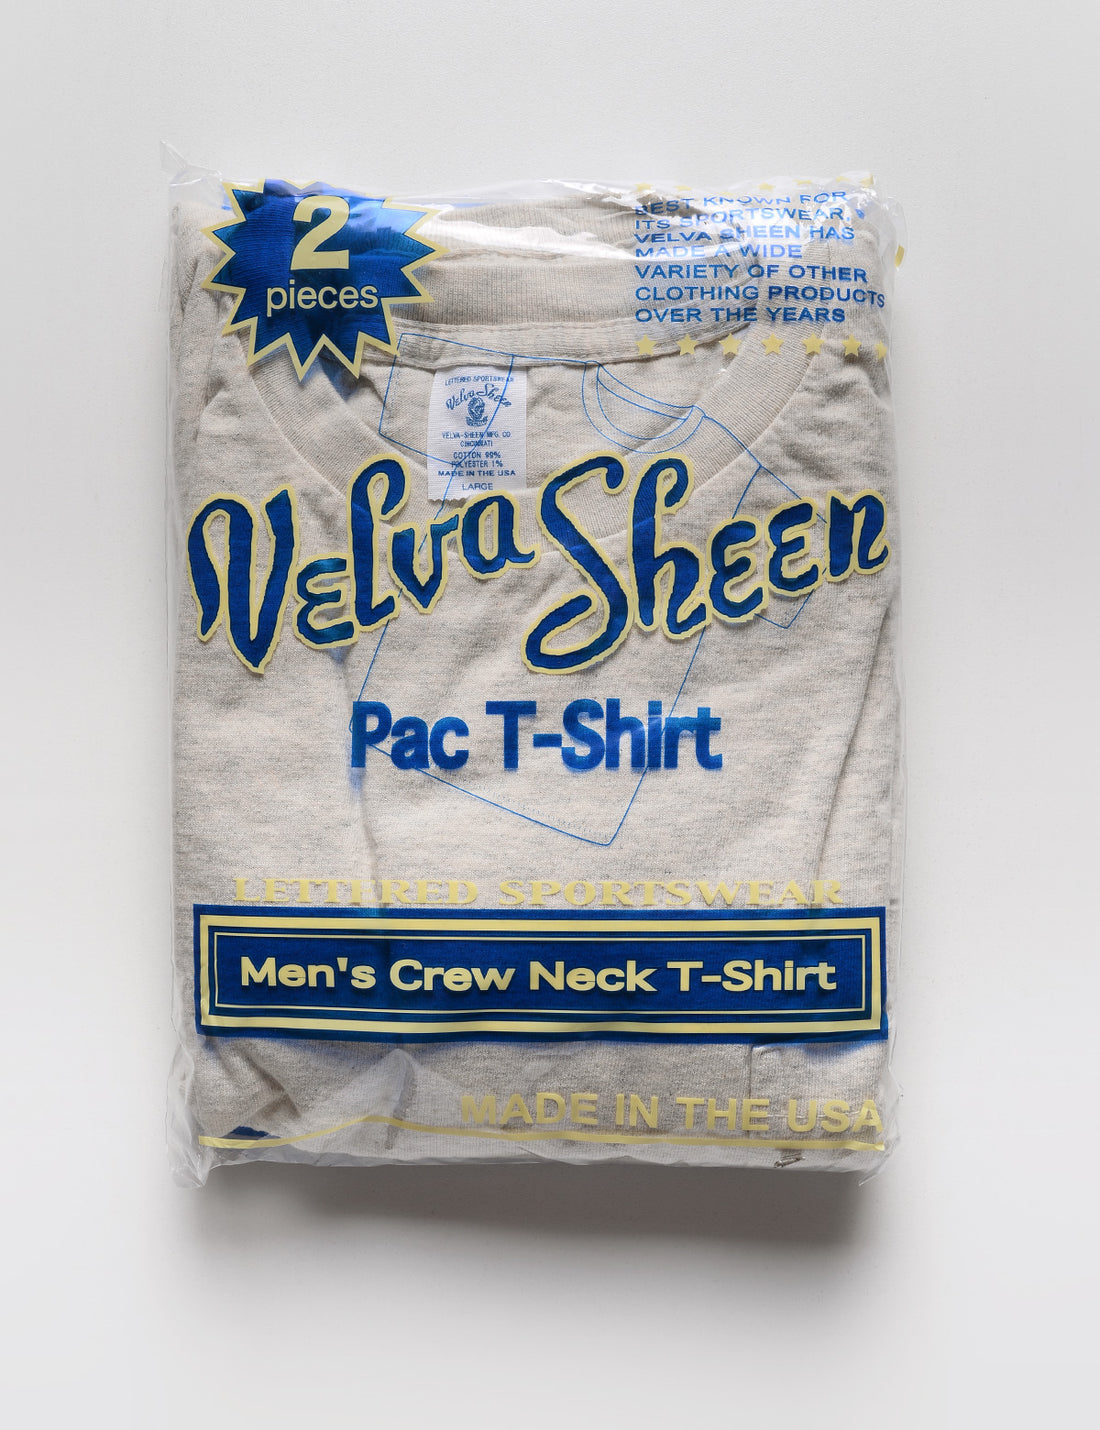 Velva Sheen 2-Pack Short Sleeve Tee in Oatmeal in clear plastic packaging